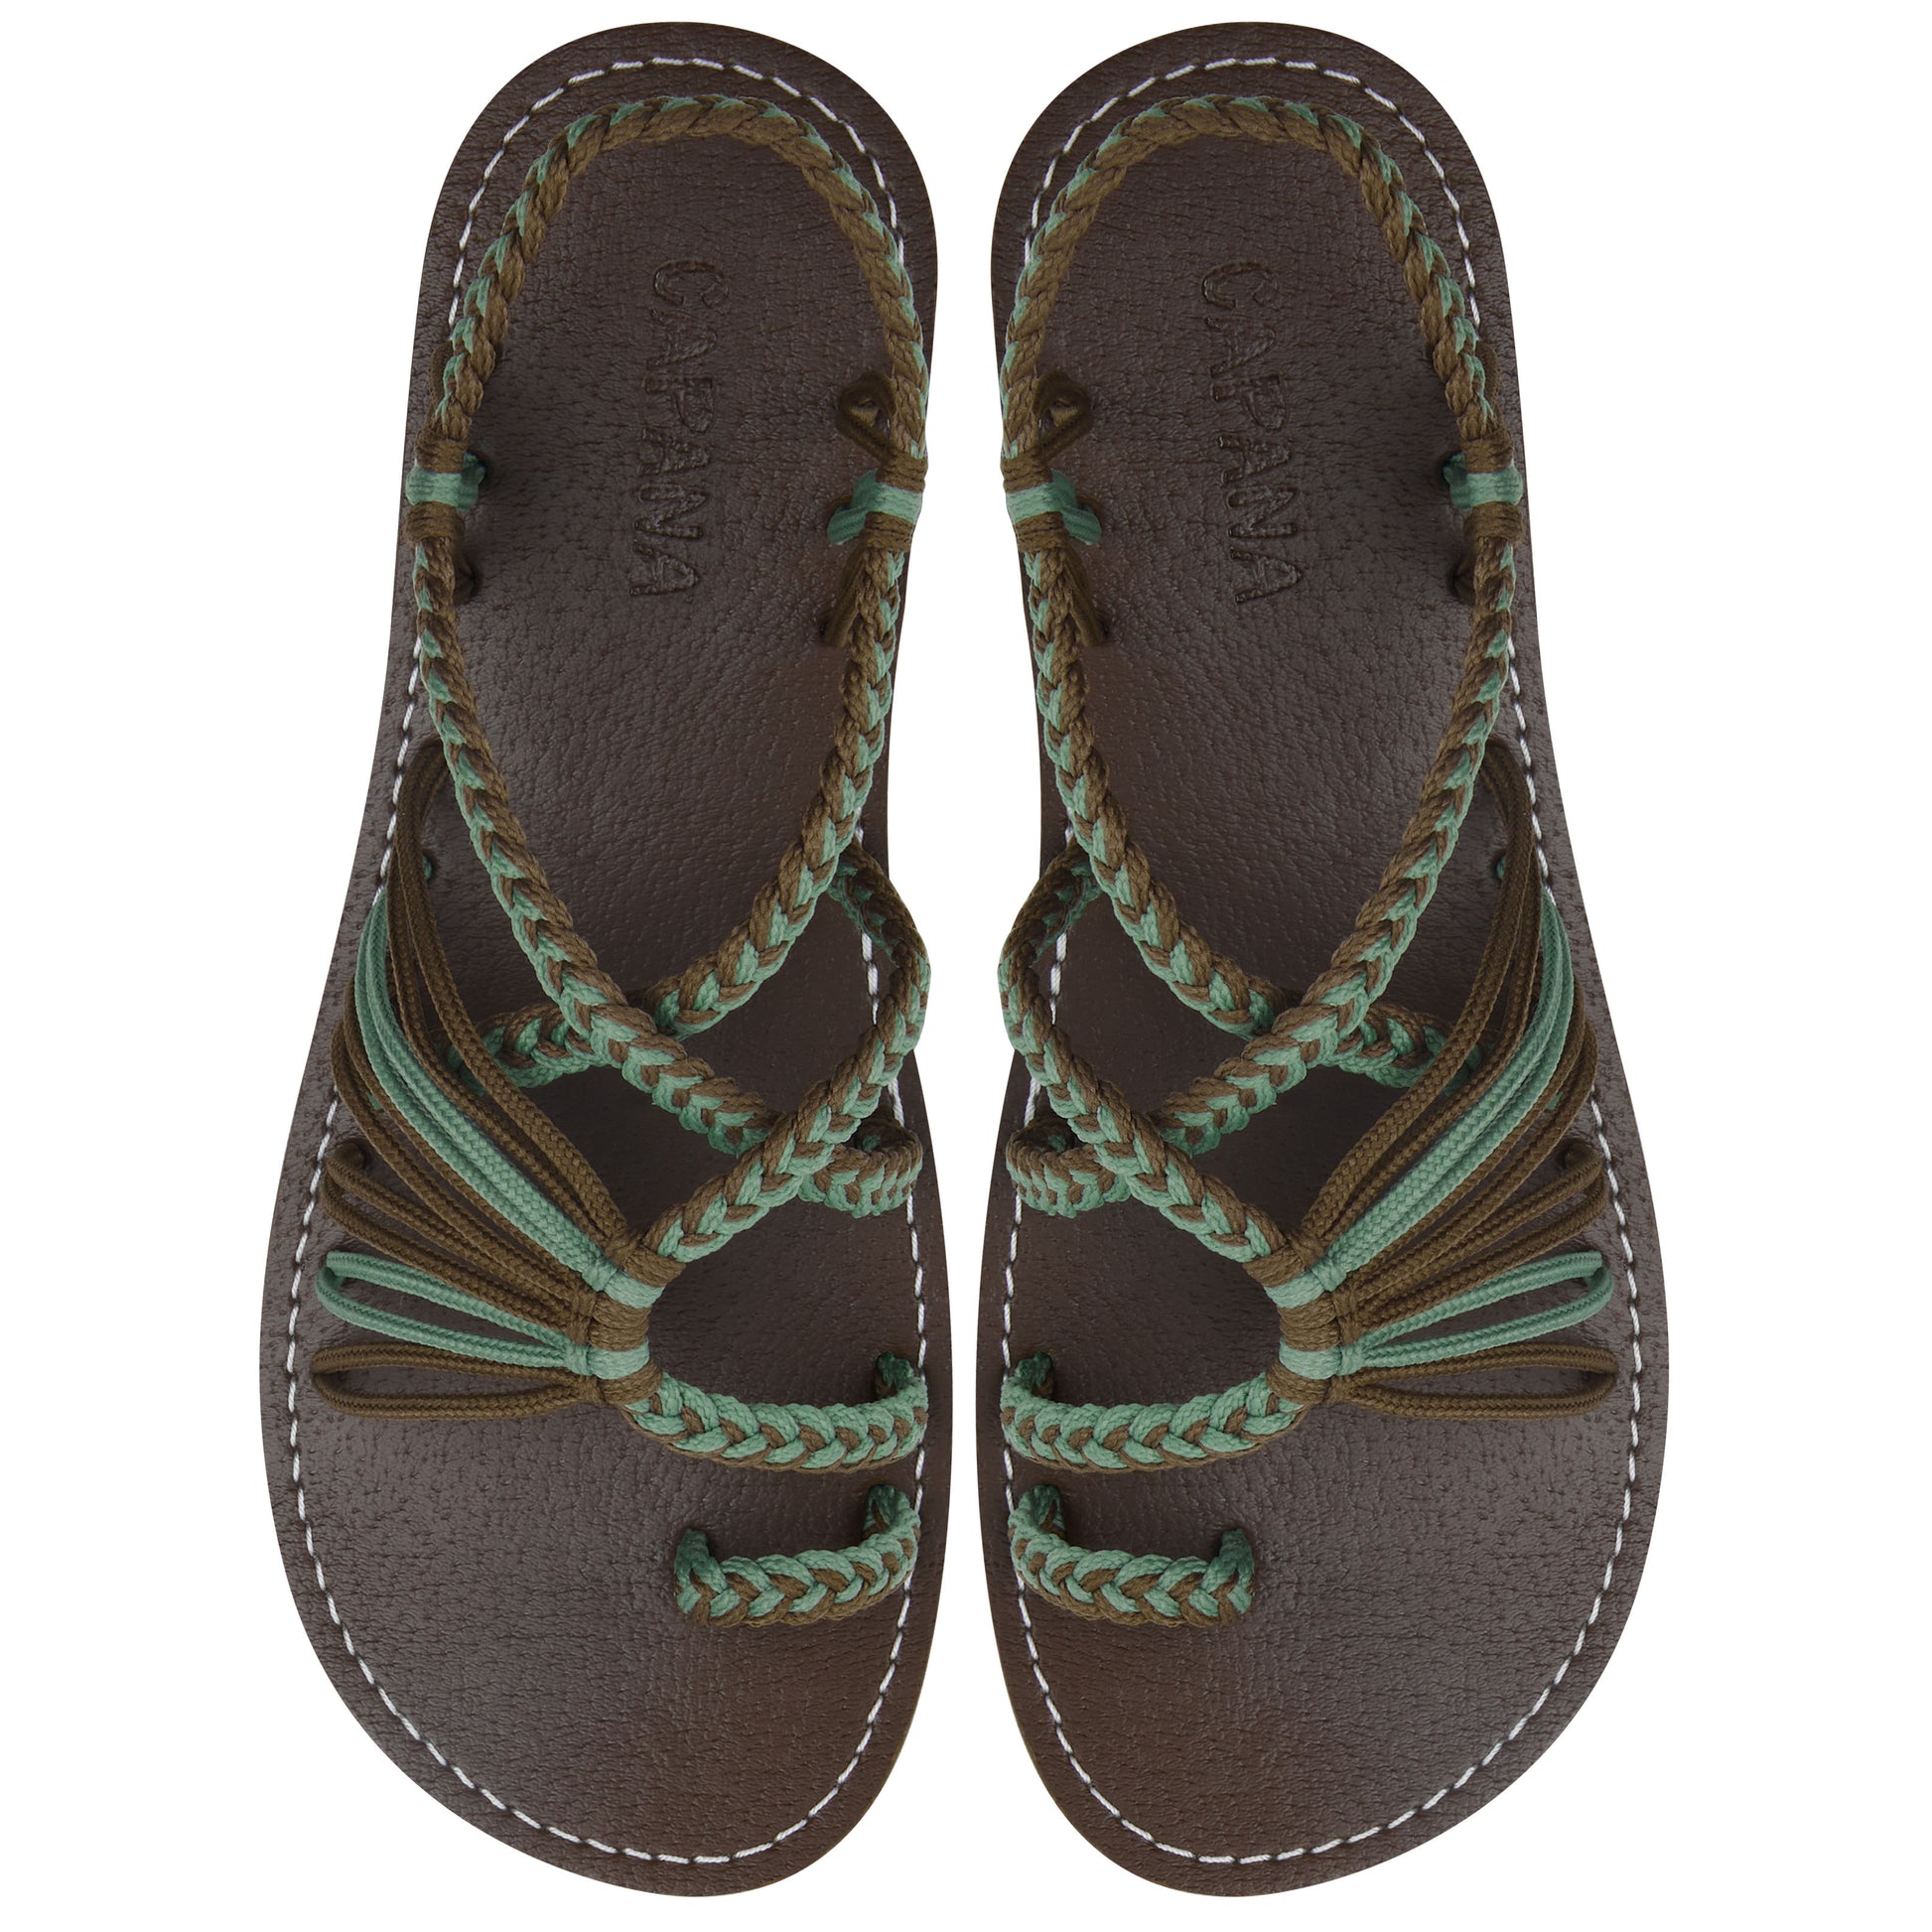 Commune Green tea - Taupe Rope Sandals Matcha Dark Gray loop design Flat sandals for women